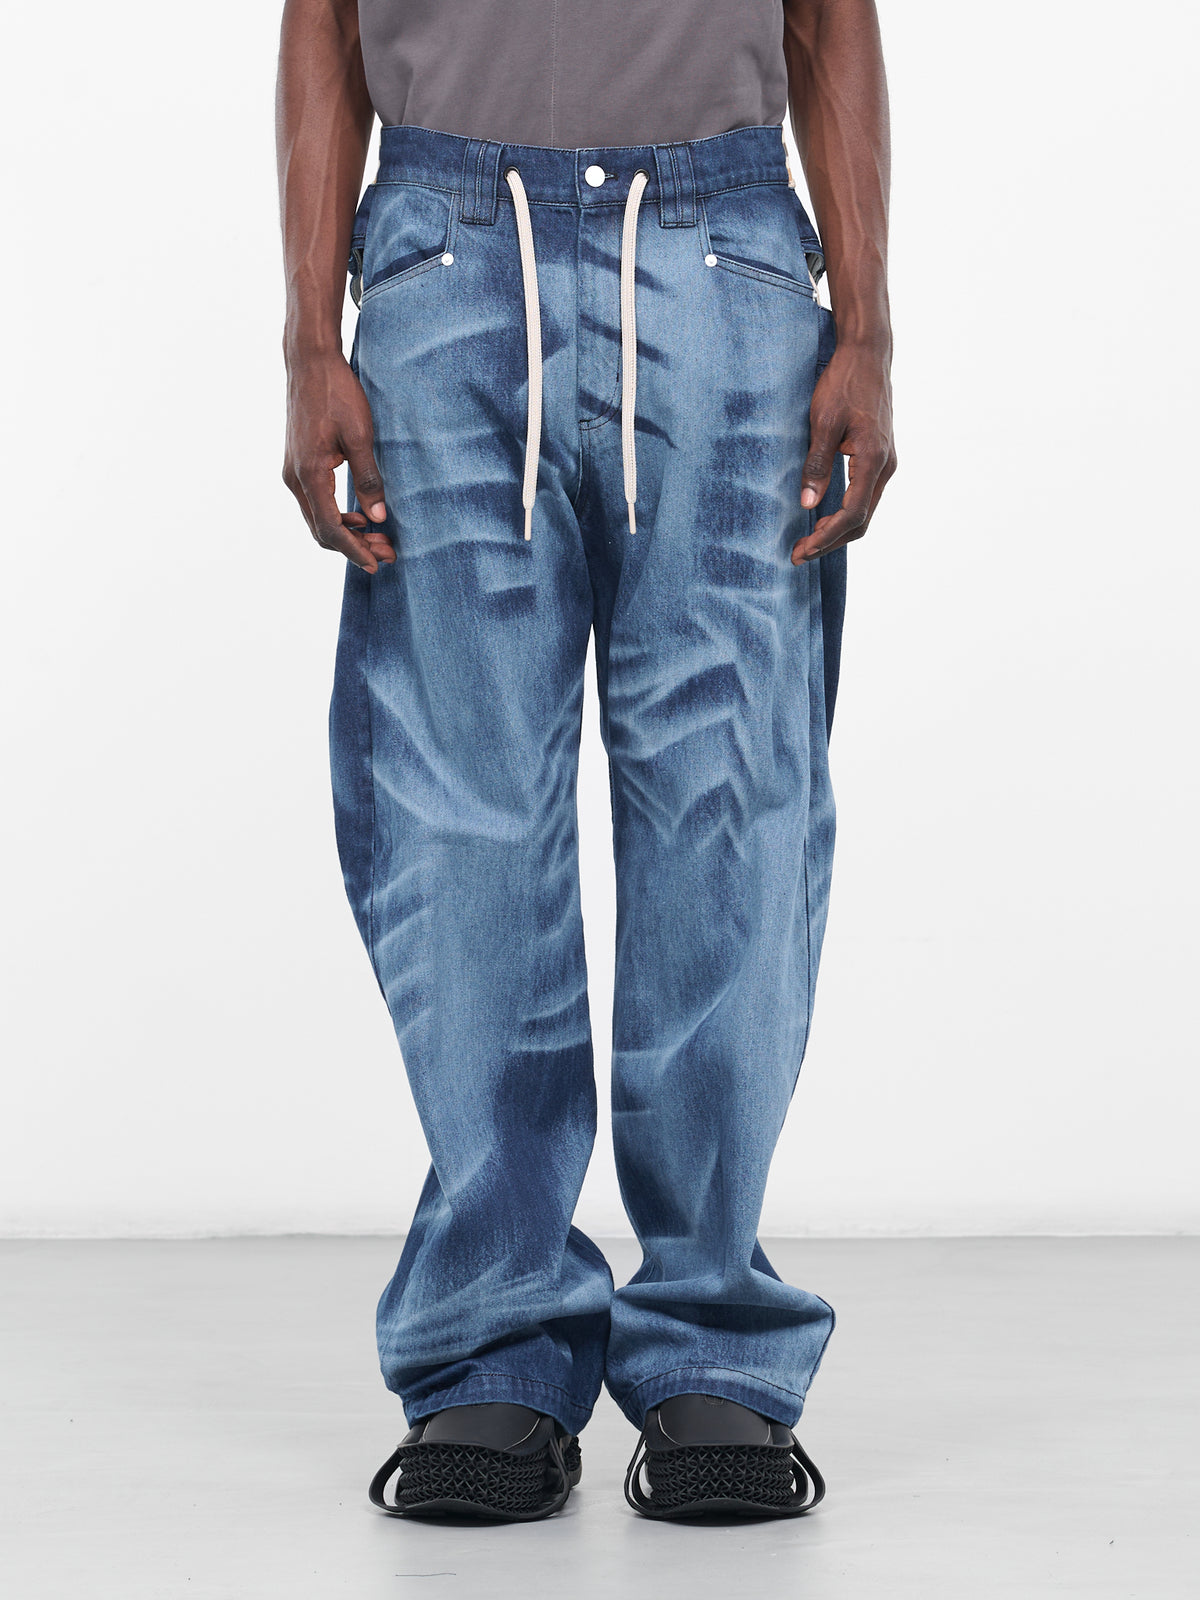 Del Cross-Over Low-Ride Jeans (N3-N3-PT-08-YALE-BLUE)